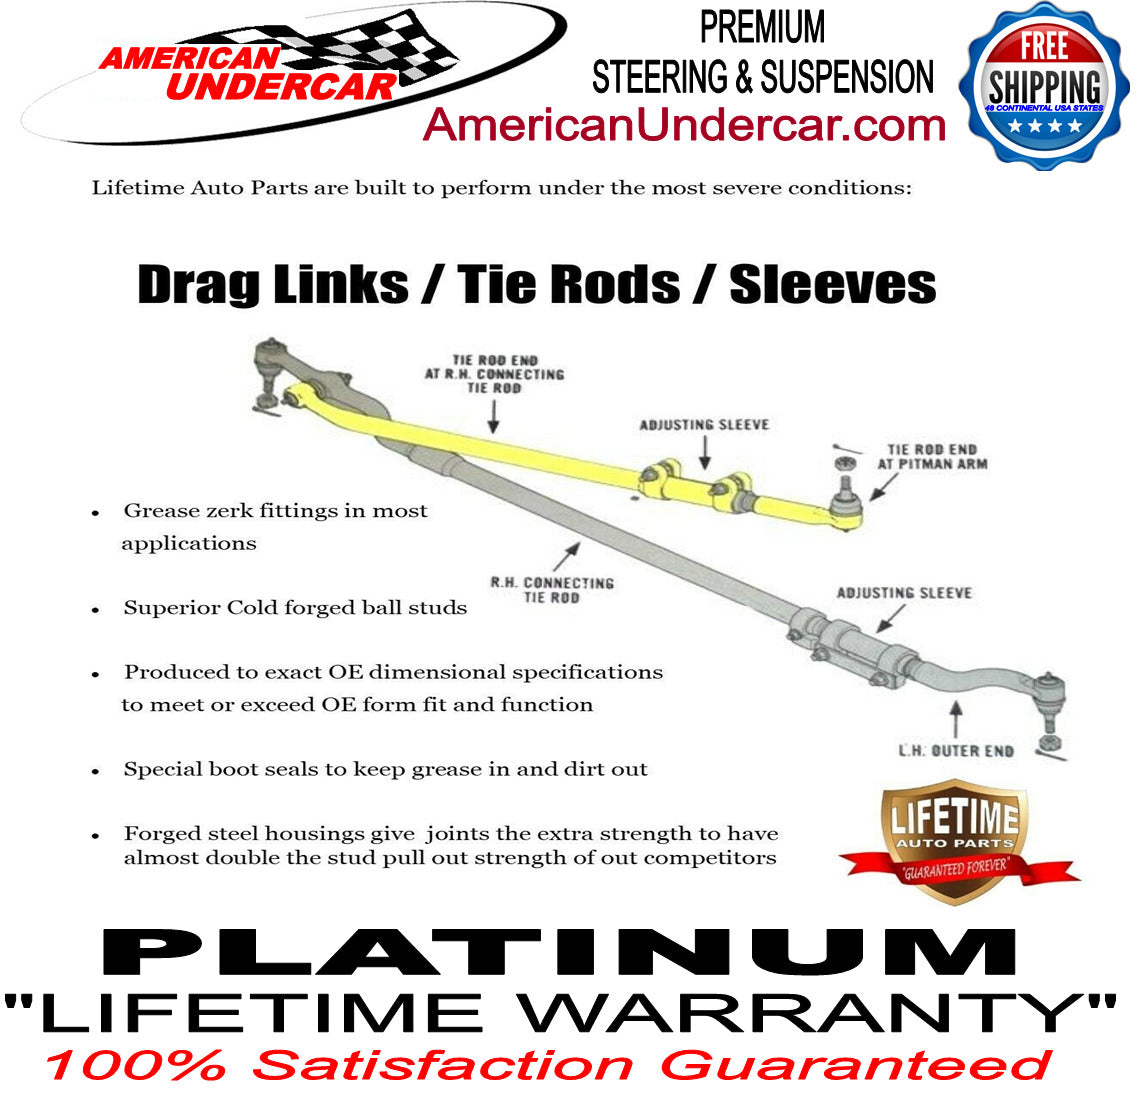 Lifetime Drag Link Tie Rod Steering Kit for 2005-2010 Ford F450, F550 Super Duty 2WD